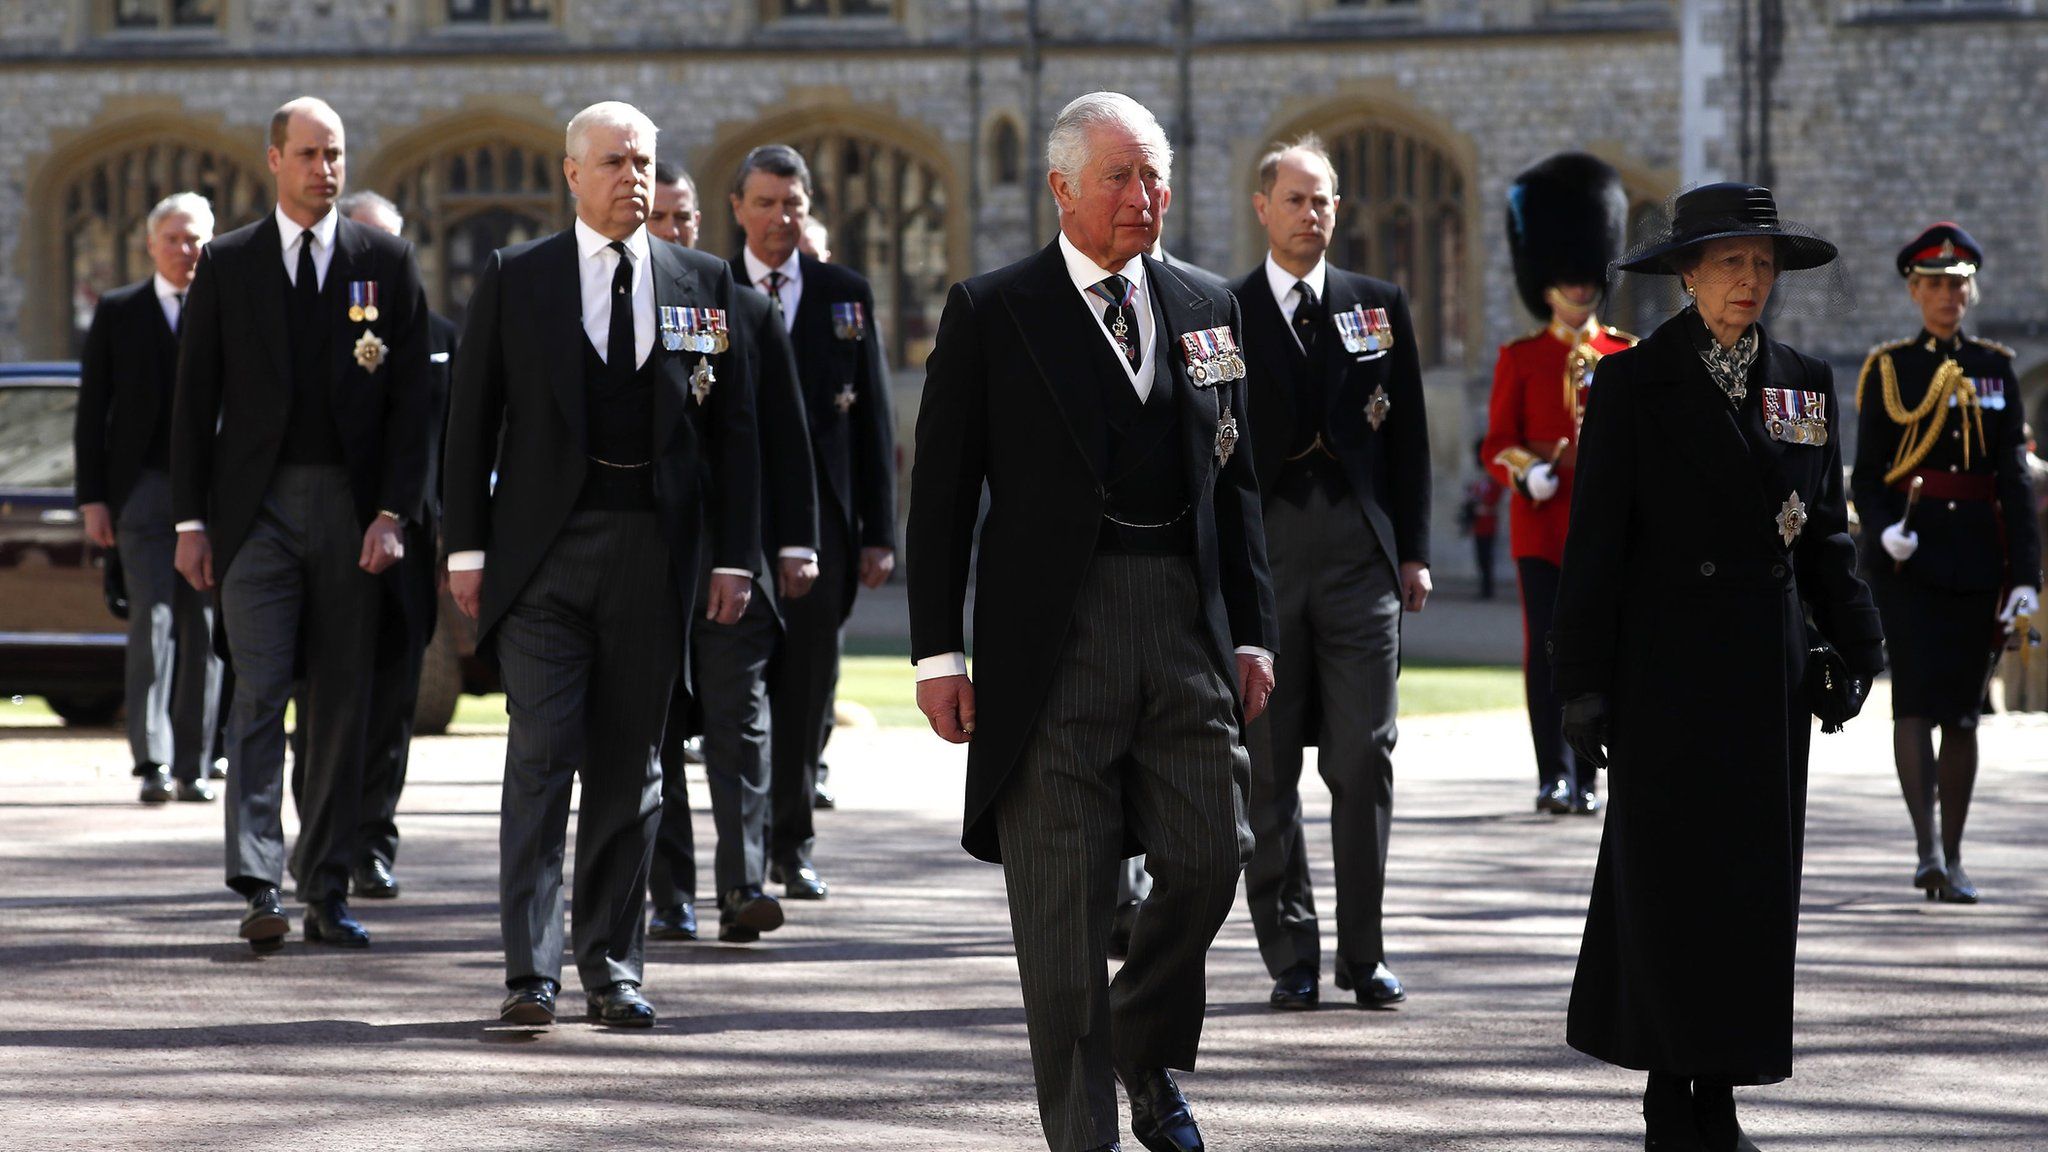 Senior royals walk behind Prince Philip's coffin